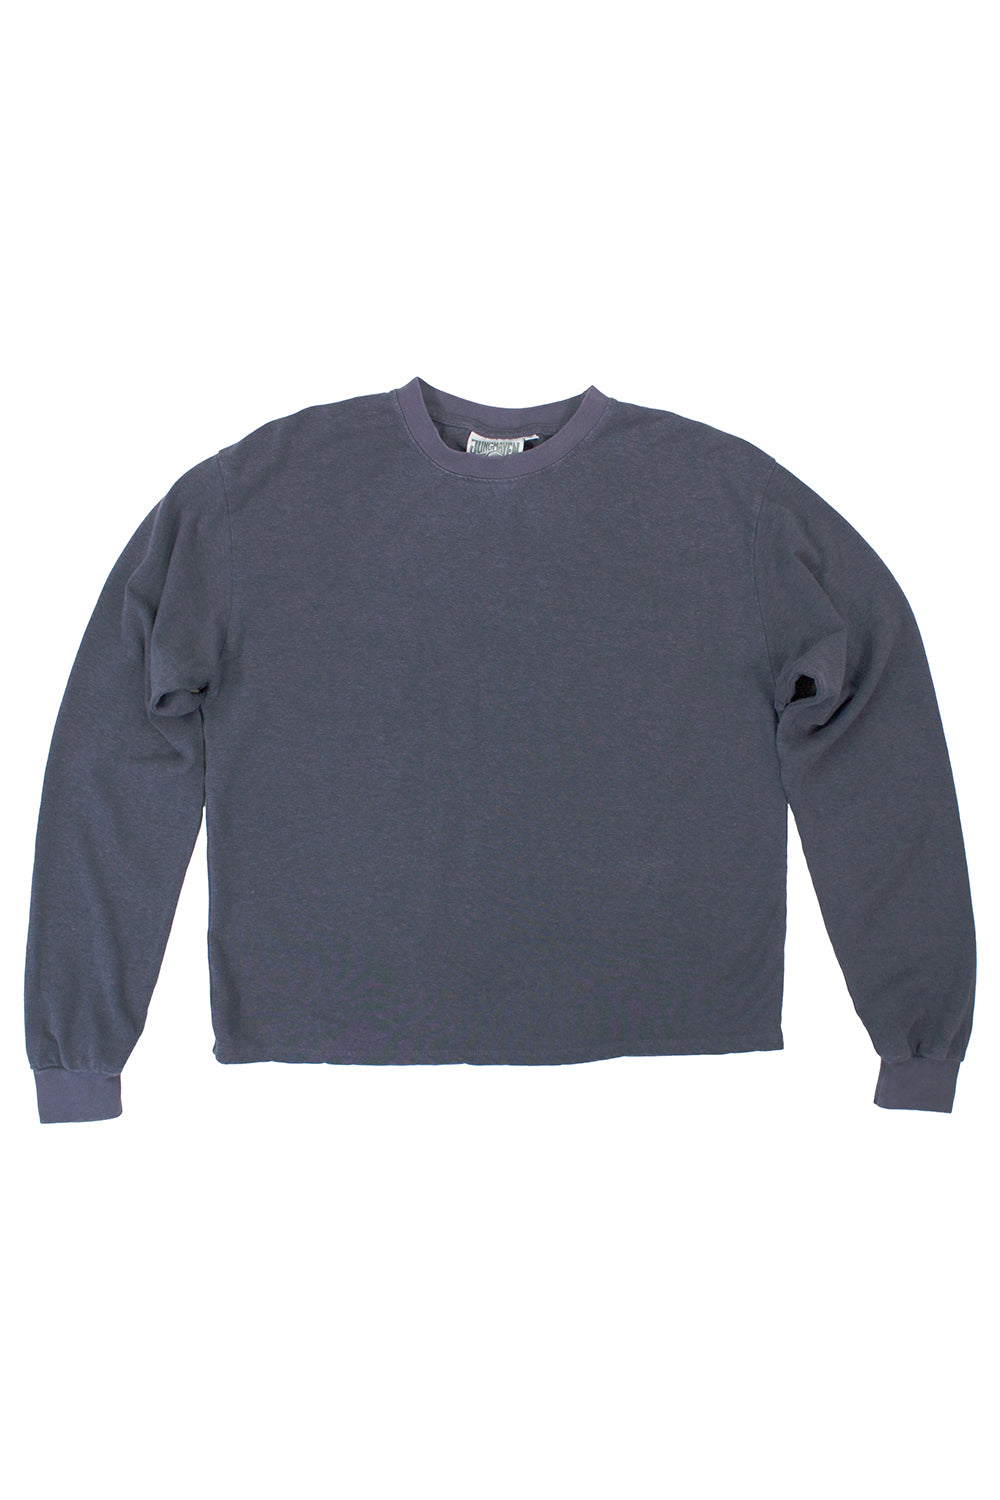 Tatoosh Cropped Long Sleeve Tee | Jungmaven Hemp Clothing & Accessories / Color: Diesel Gray